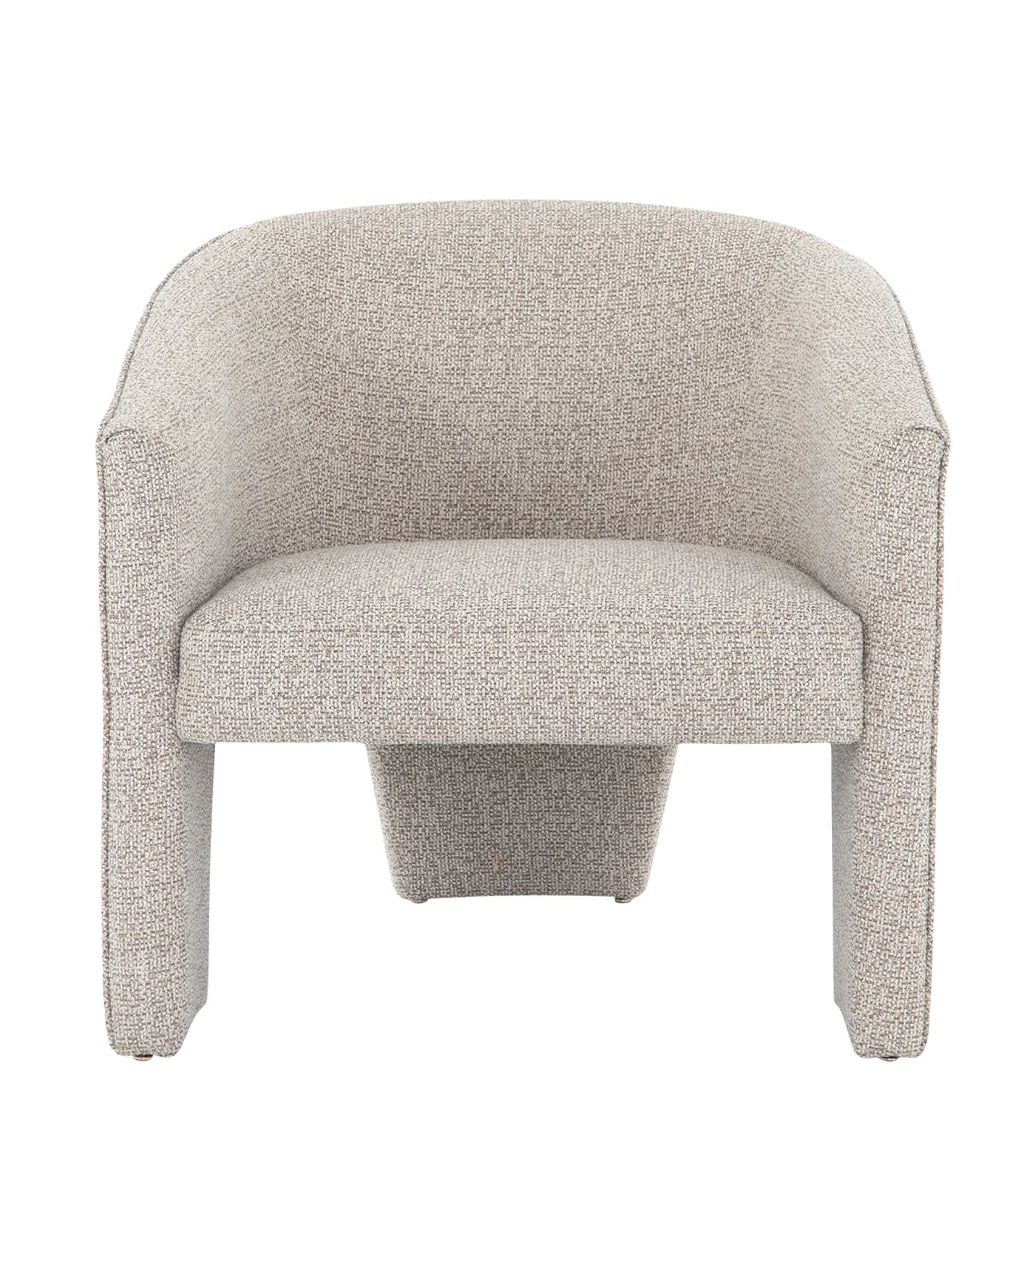 Amberlin Lounge Chair | McGee & Co.